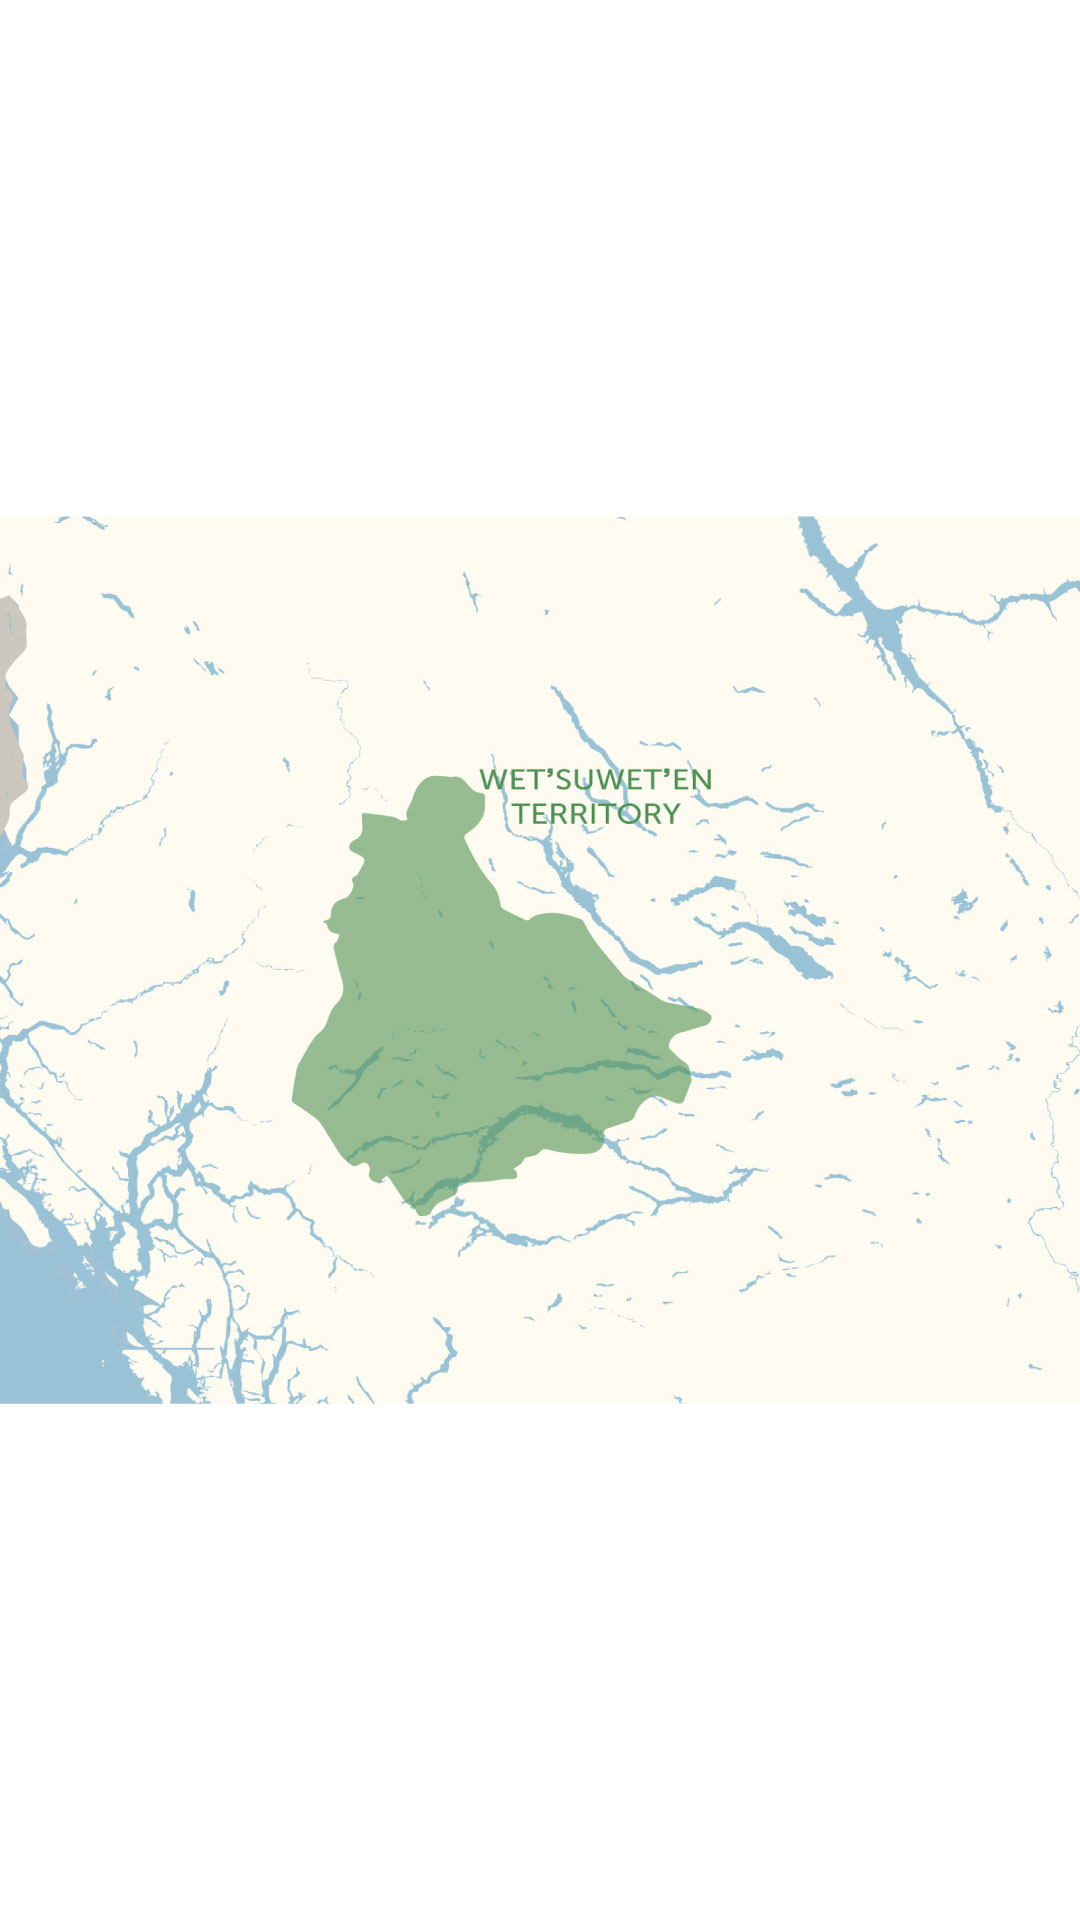 Map of Wet'suwet'en territory in northwestern B.C.